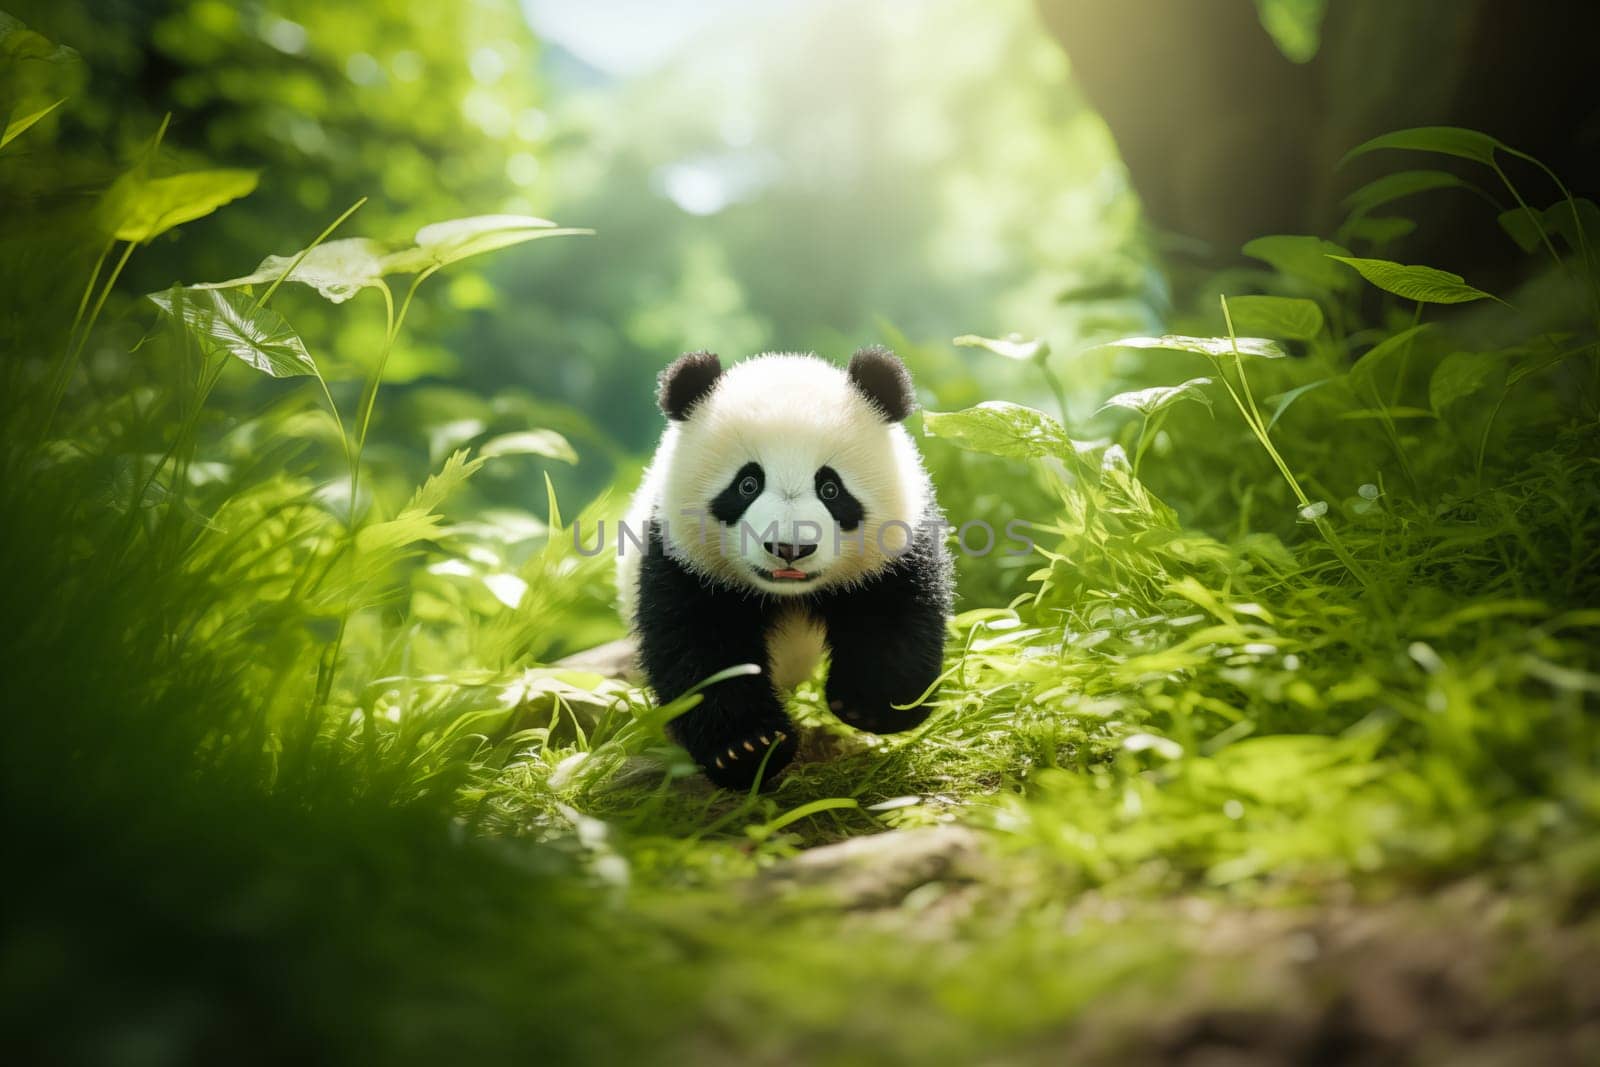 Adorable Panda Cub in a Bamboo Grove by dimol